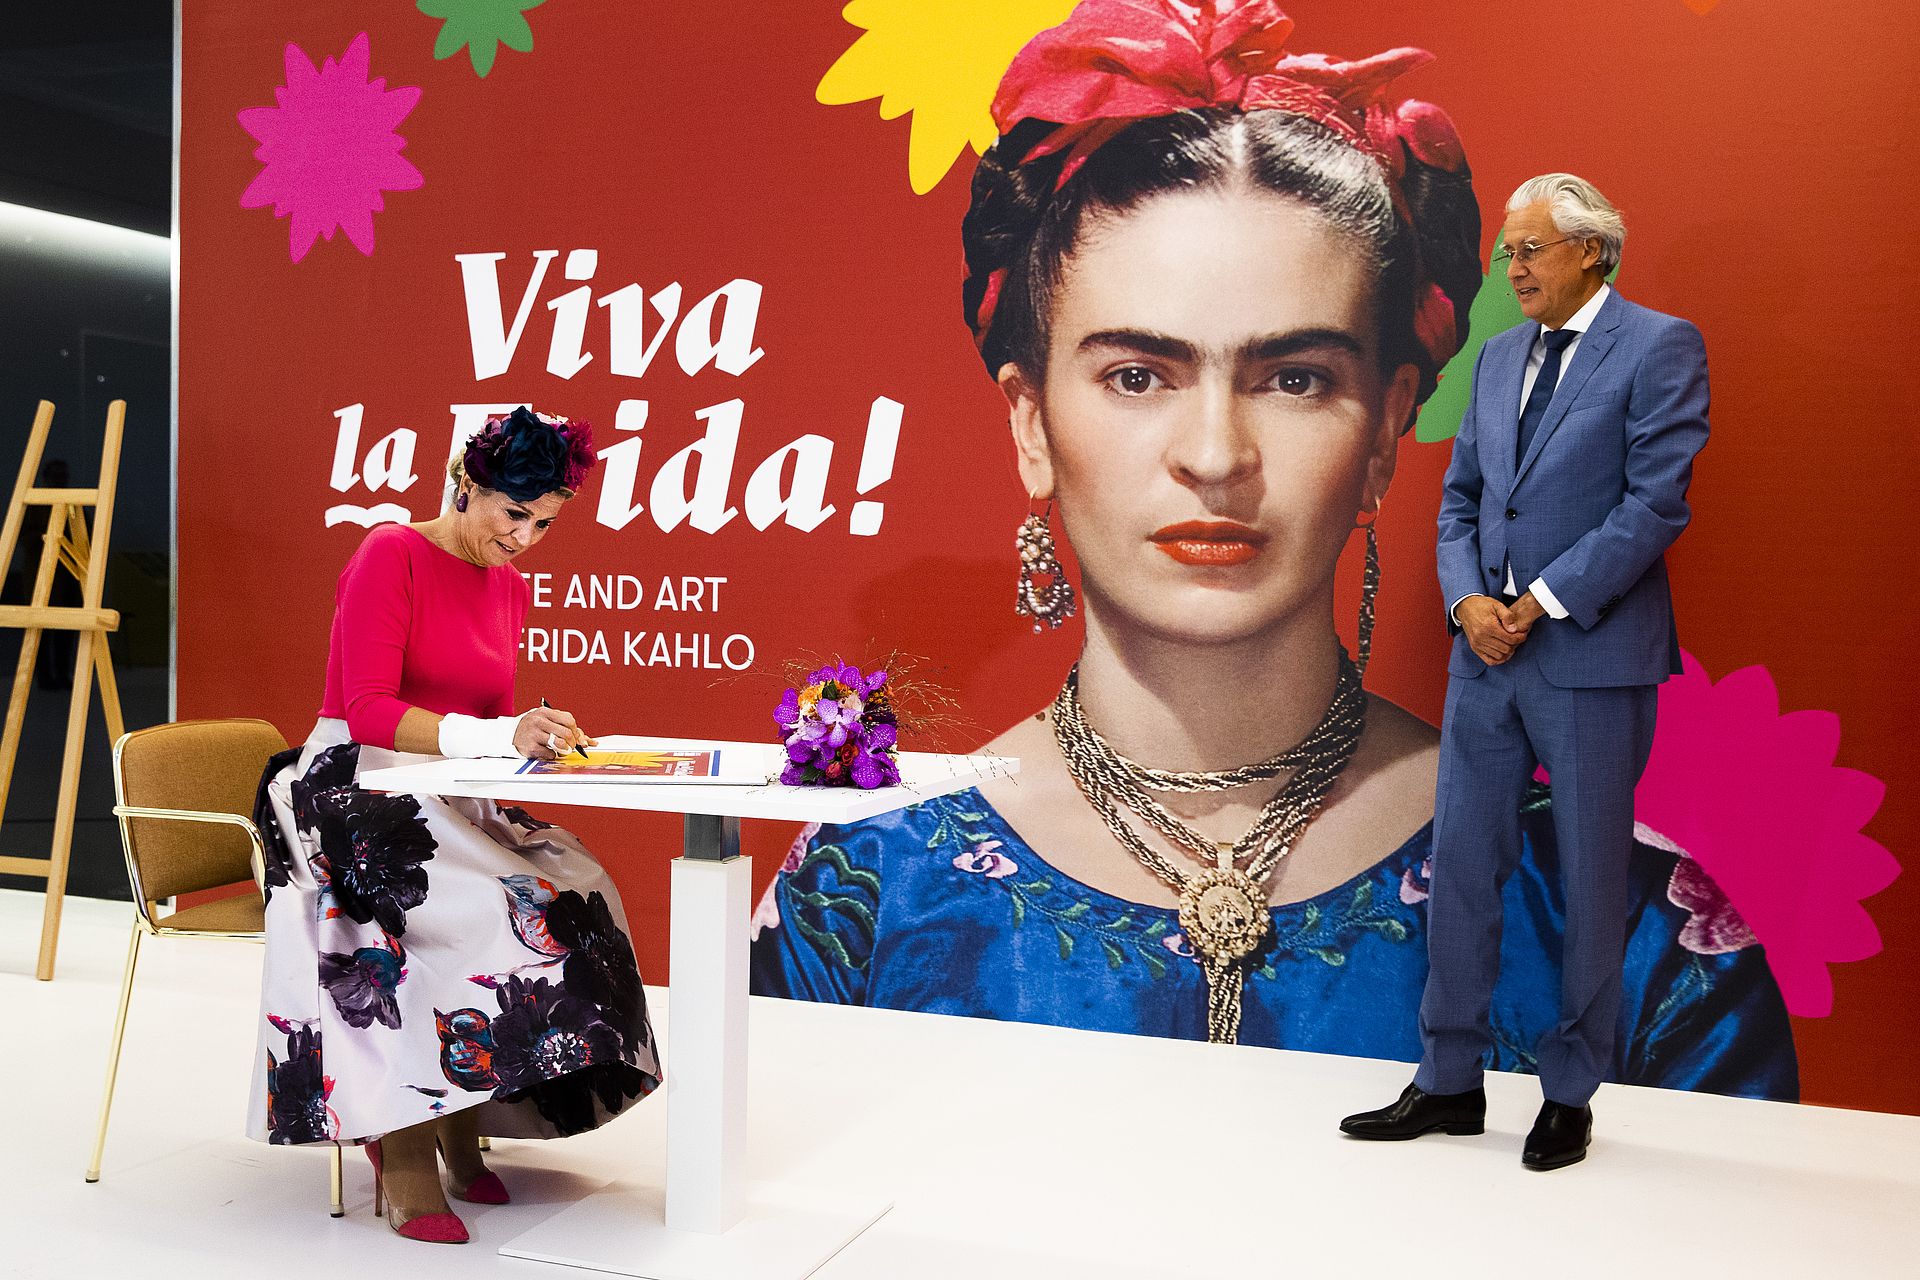 Máxima opent de tentoonstelling over Frida Kahlo.